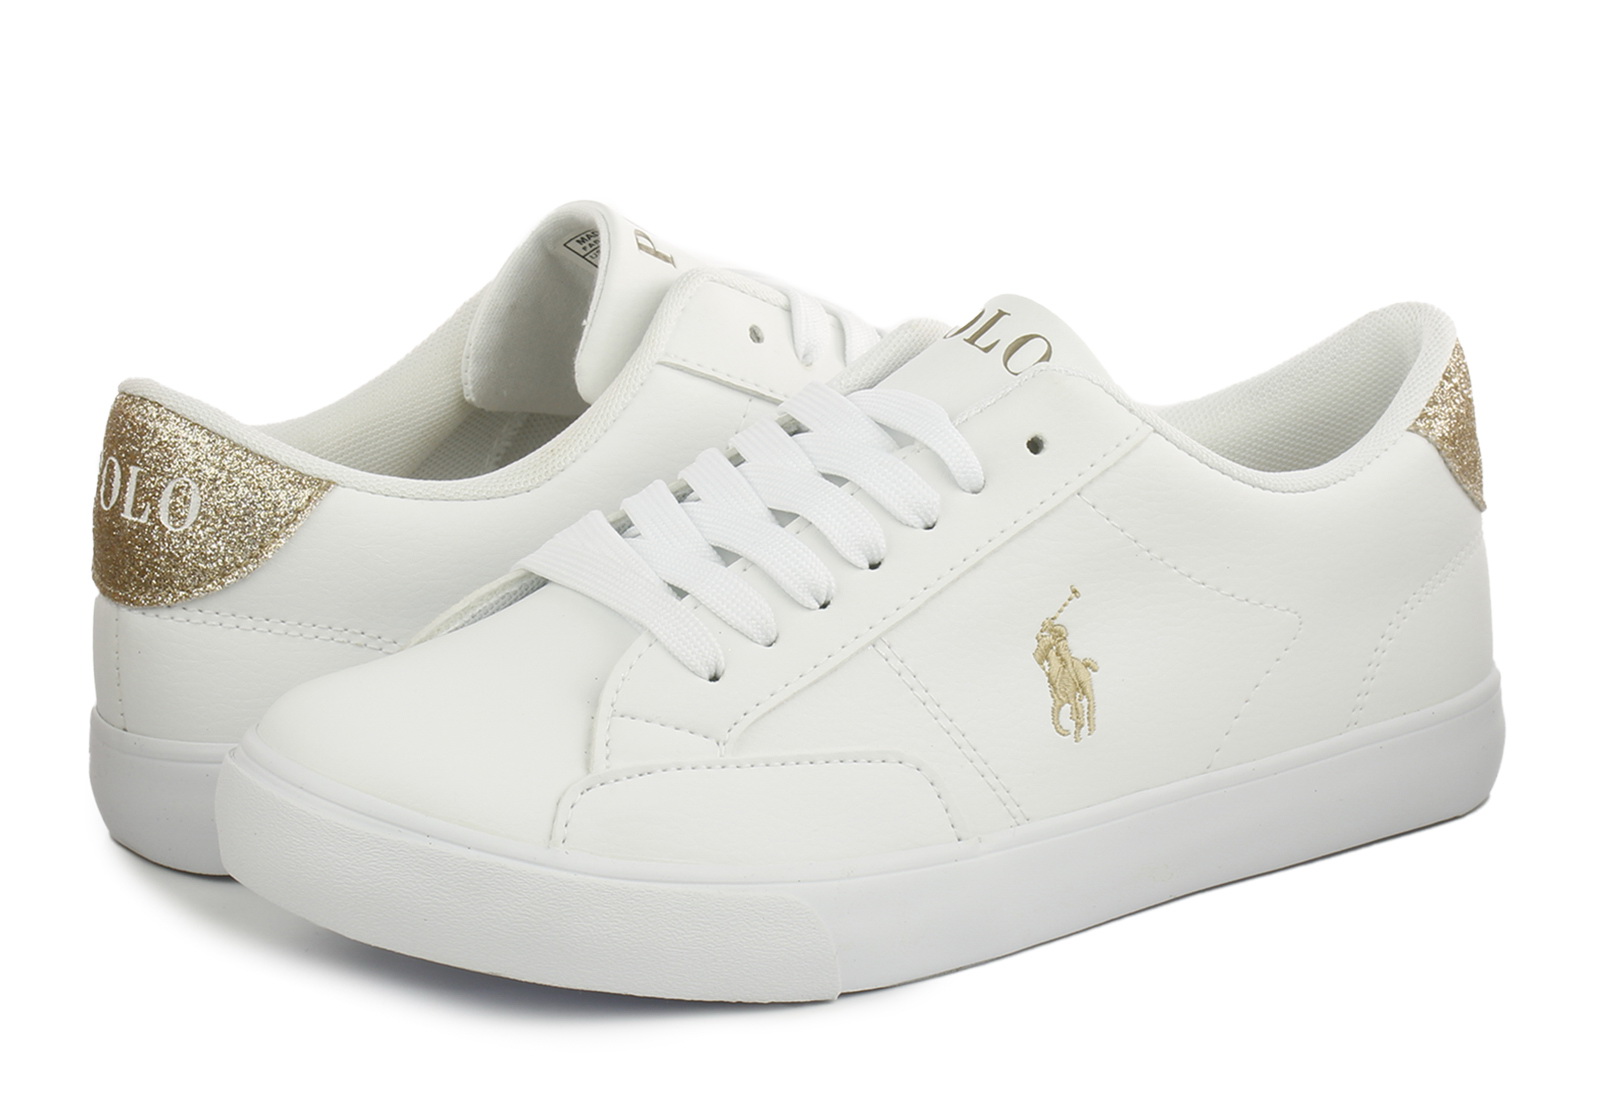 Polo Ralph Lauren Niske Cipele Bijele Tenisice - Theron IV - Shoes - Online trgovina obuće